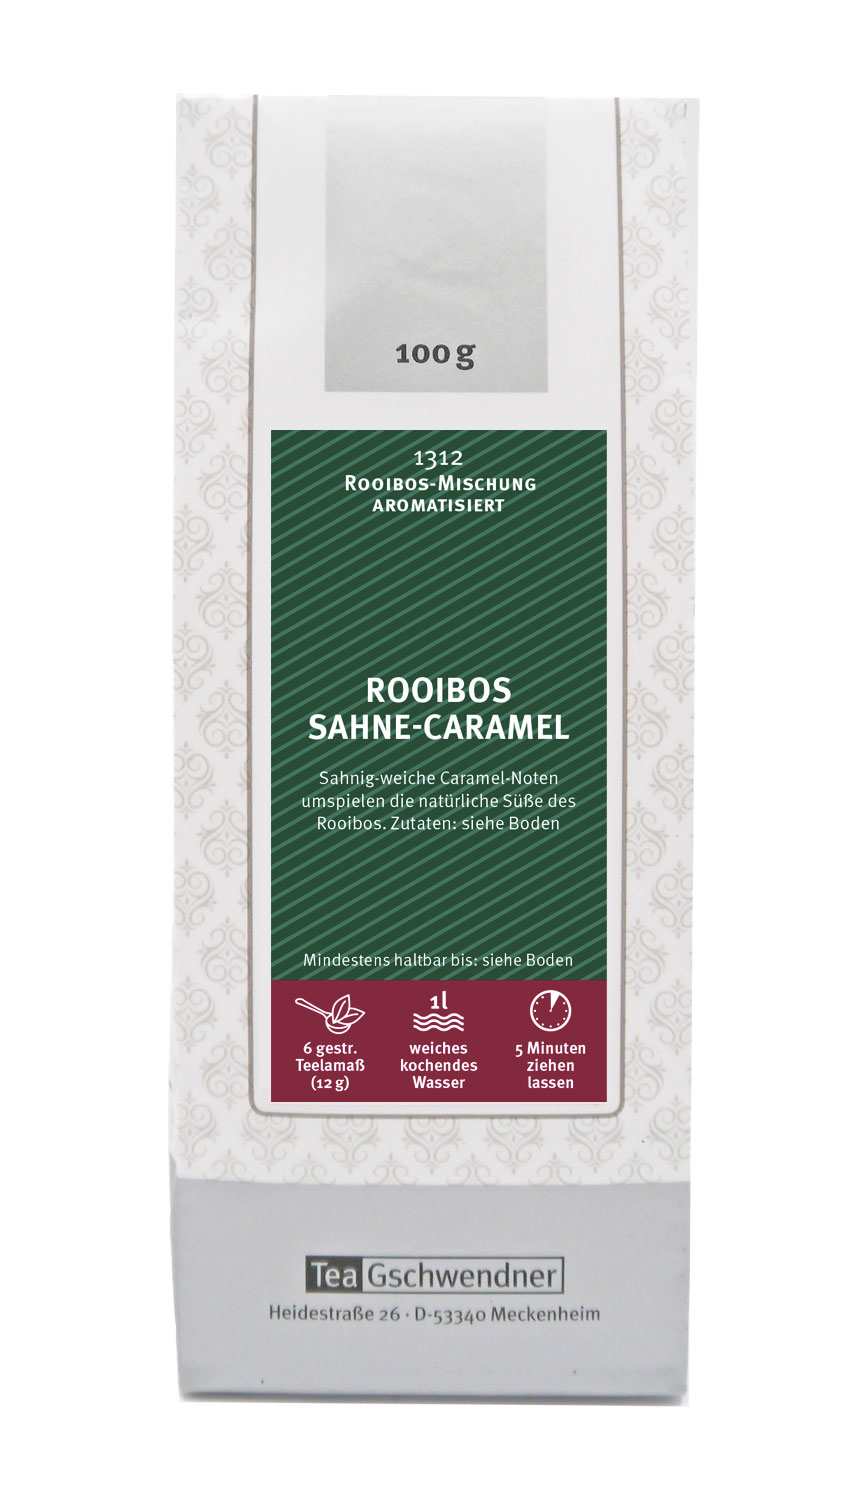 Rooibos Sahne-Caramel